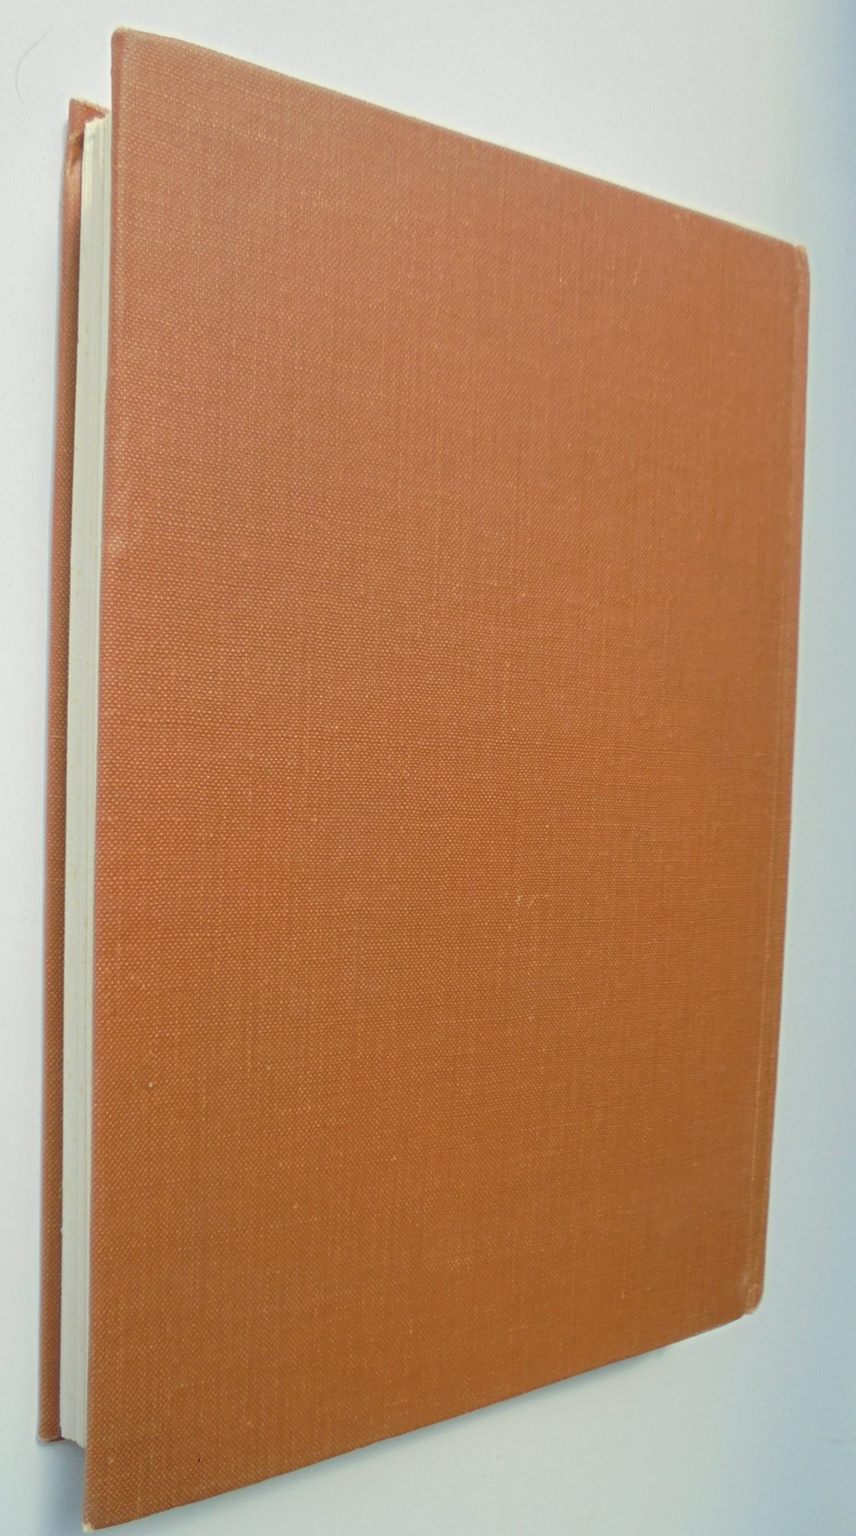 Lost Empires. By J. B. Priestley. Hardback 1st edition (1965)